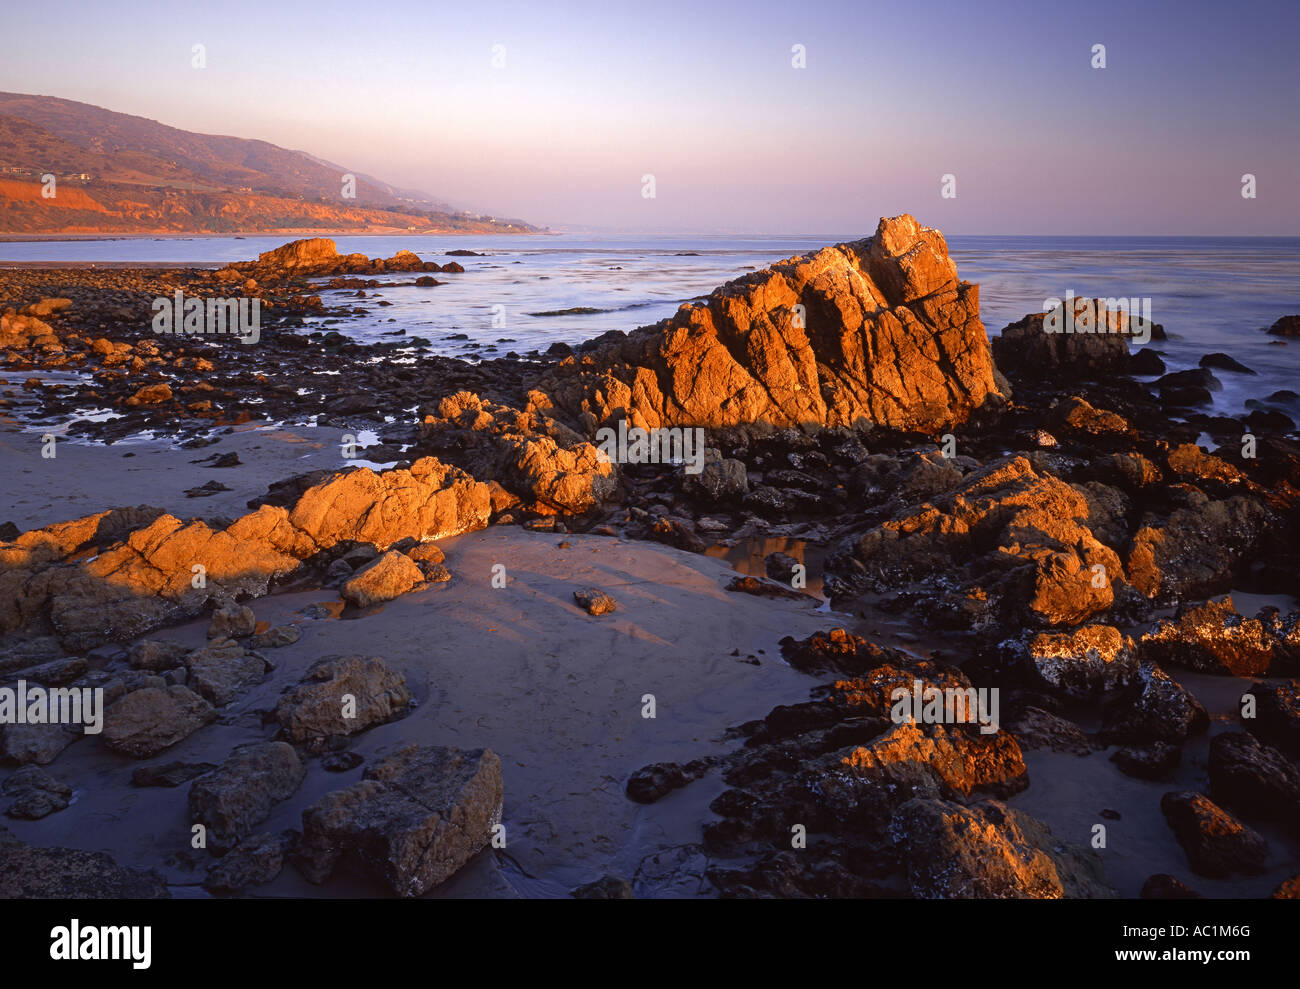 Leo Carrillo State Beach Malibu Los Angeles County Kalifornien Vereinigte Staaten Stockfoto